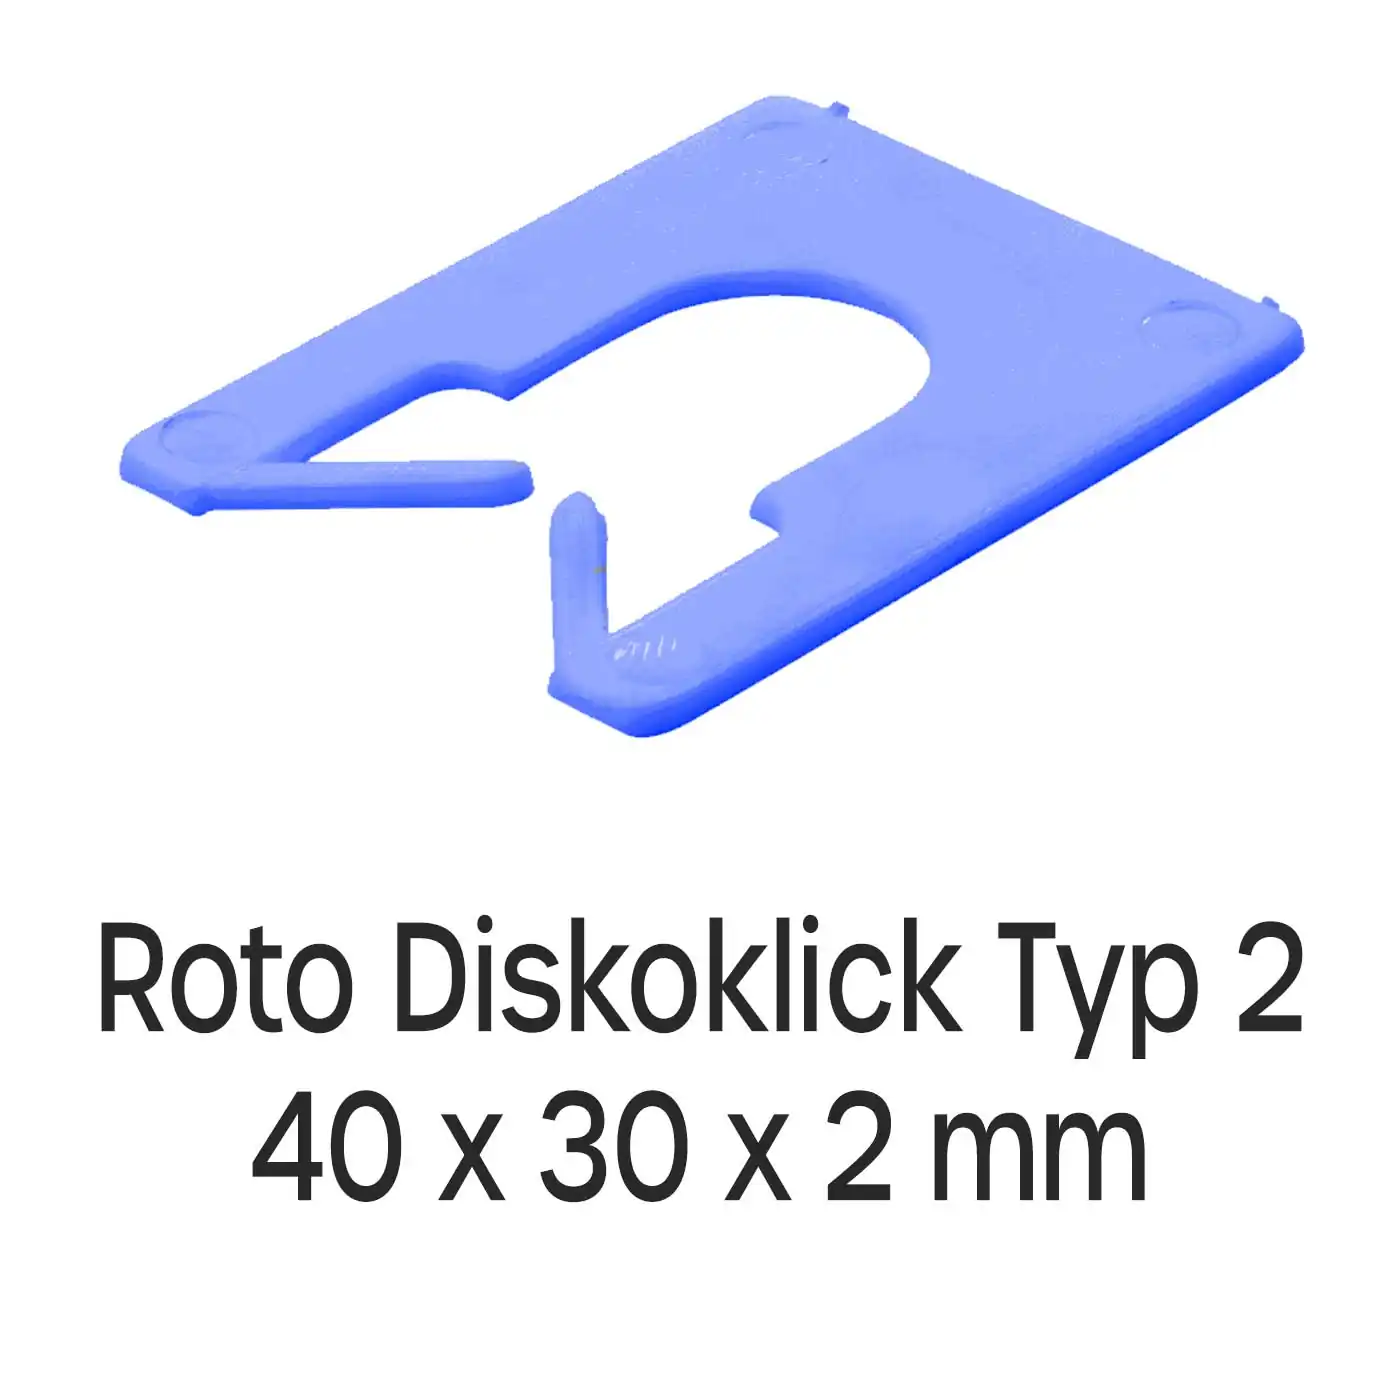 Distanzplatten Roto Diskoklick Typ 2 40 x 30 x 2 mm 1000 Stück